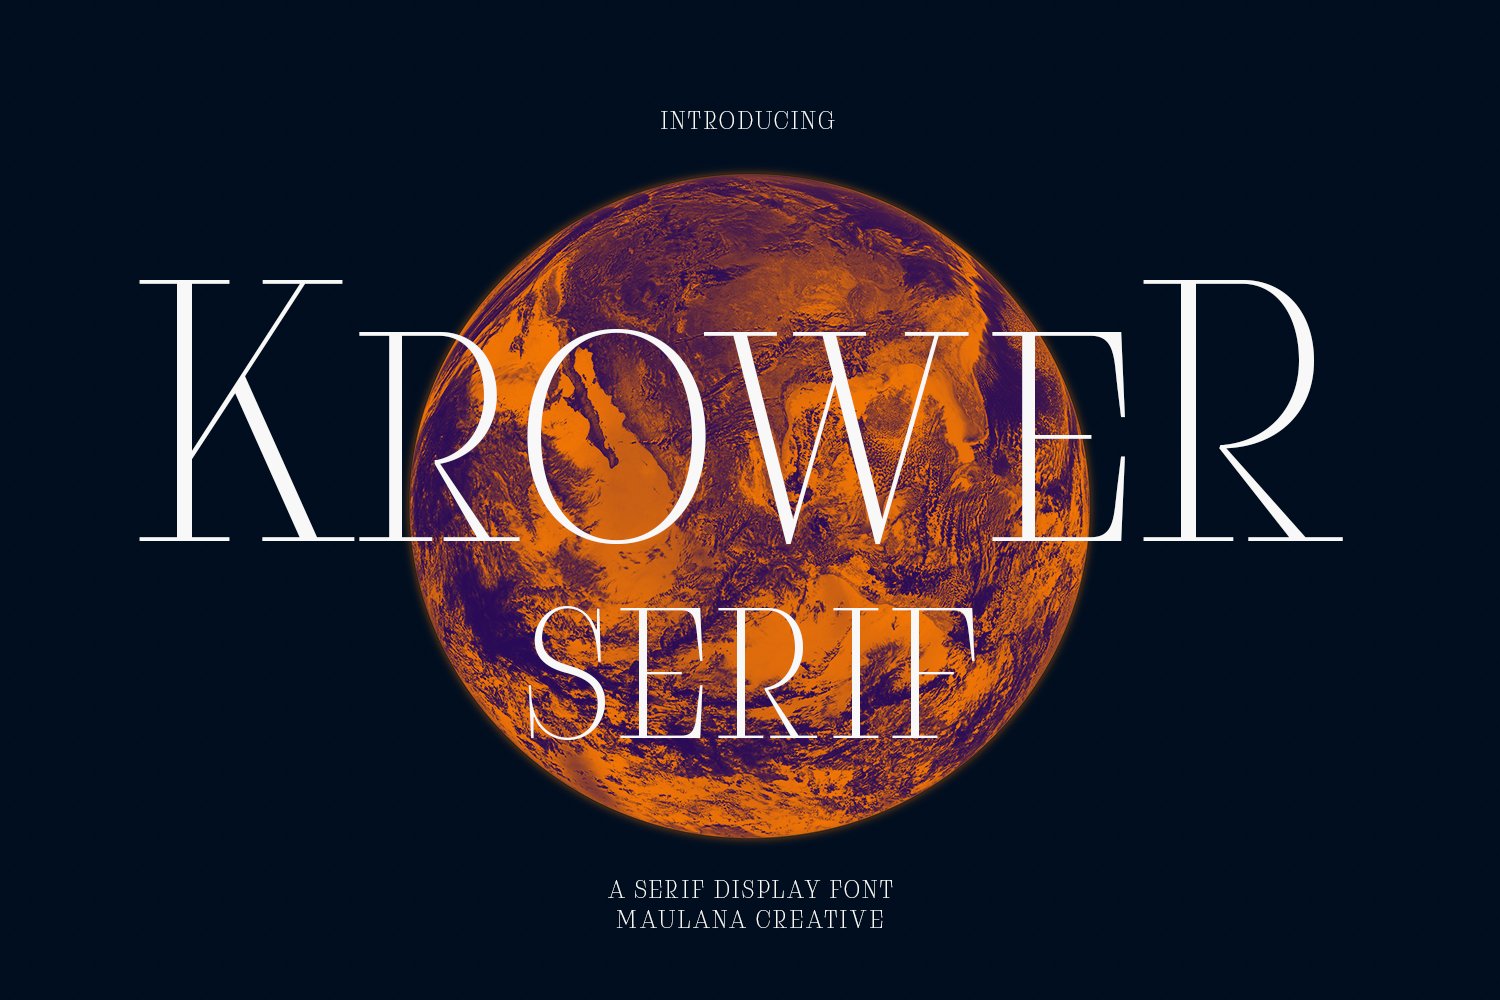 Krower Serif Display Font cover image.